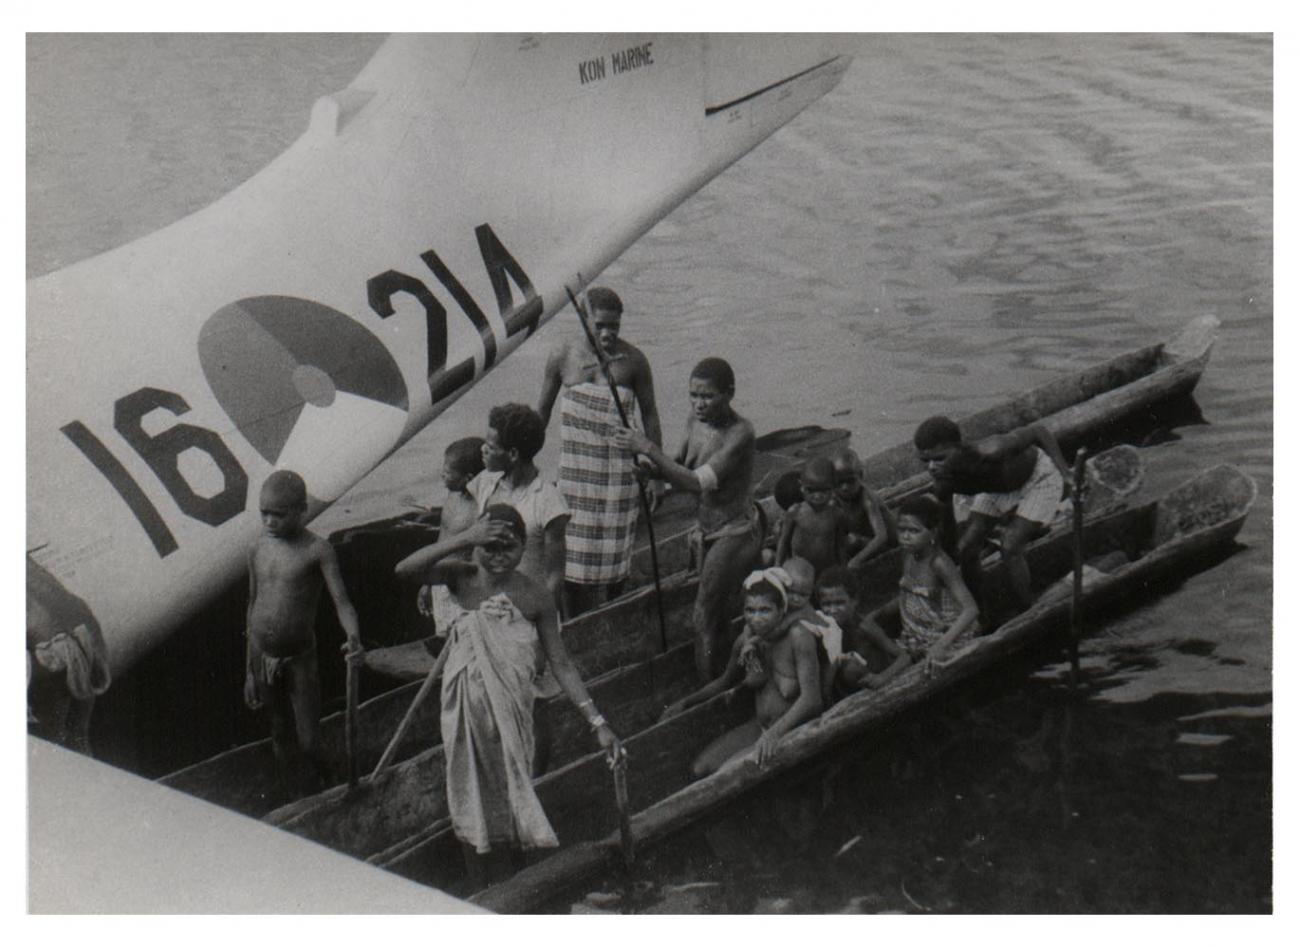 BD/54/19 - 
Aermaroe, prauwen bij watervliegtuig
